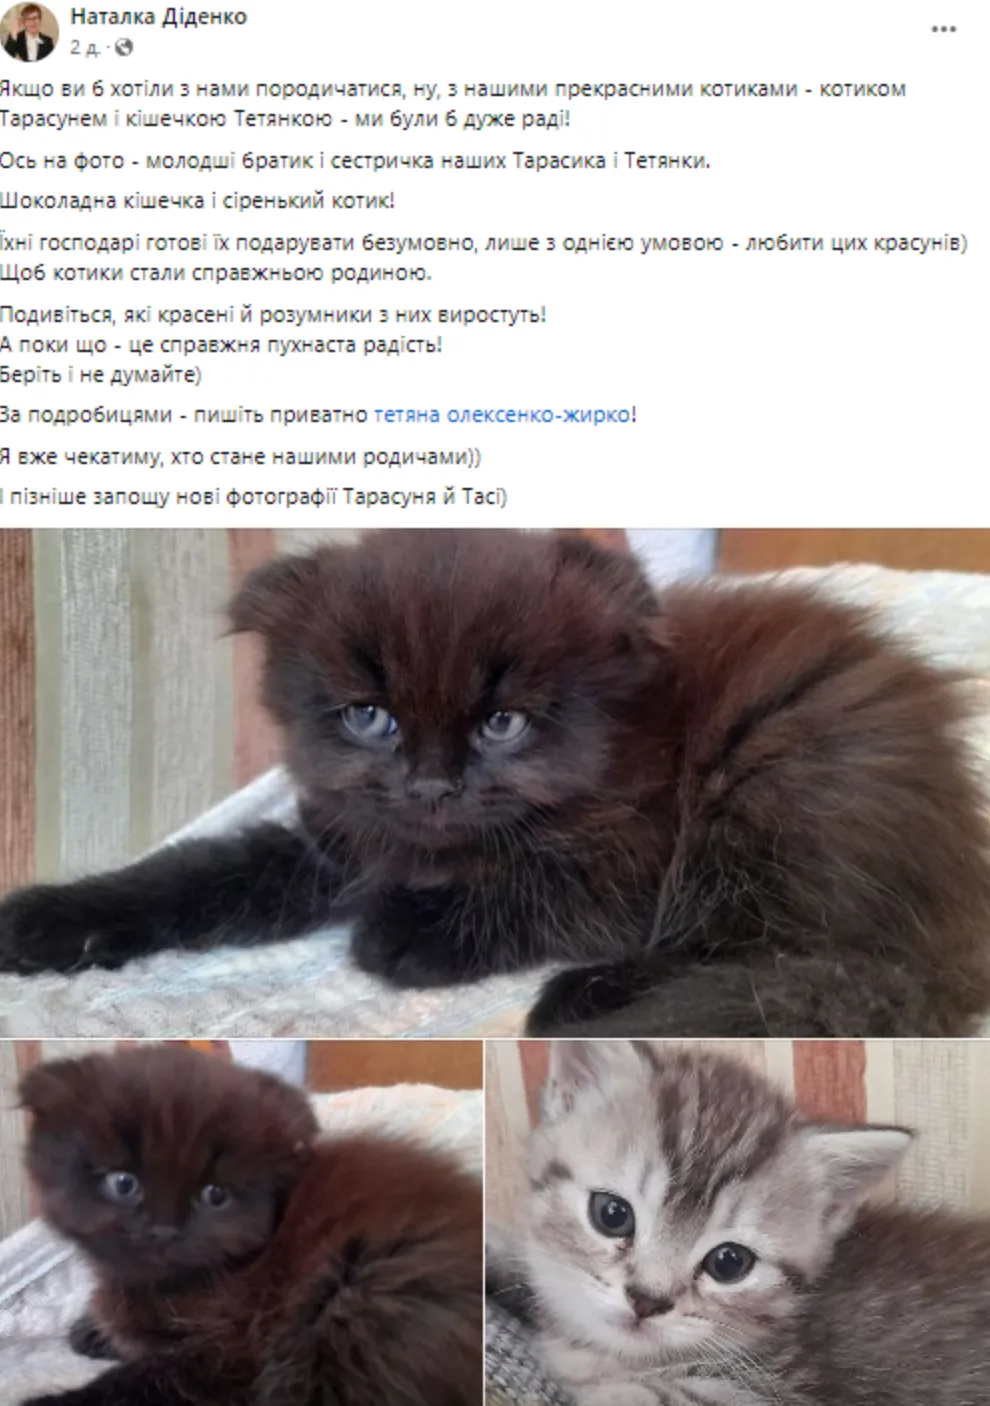 Діденко виставила пост про кошенят